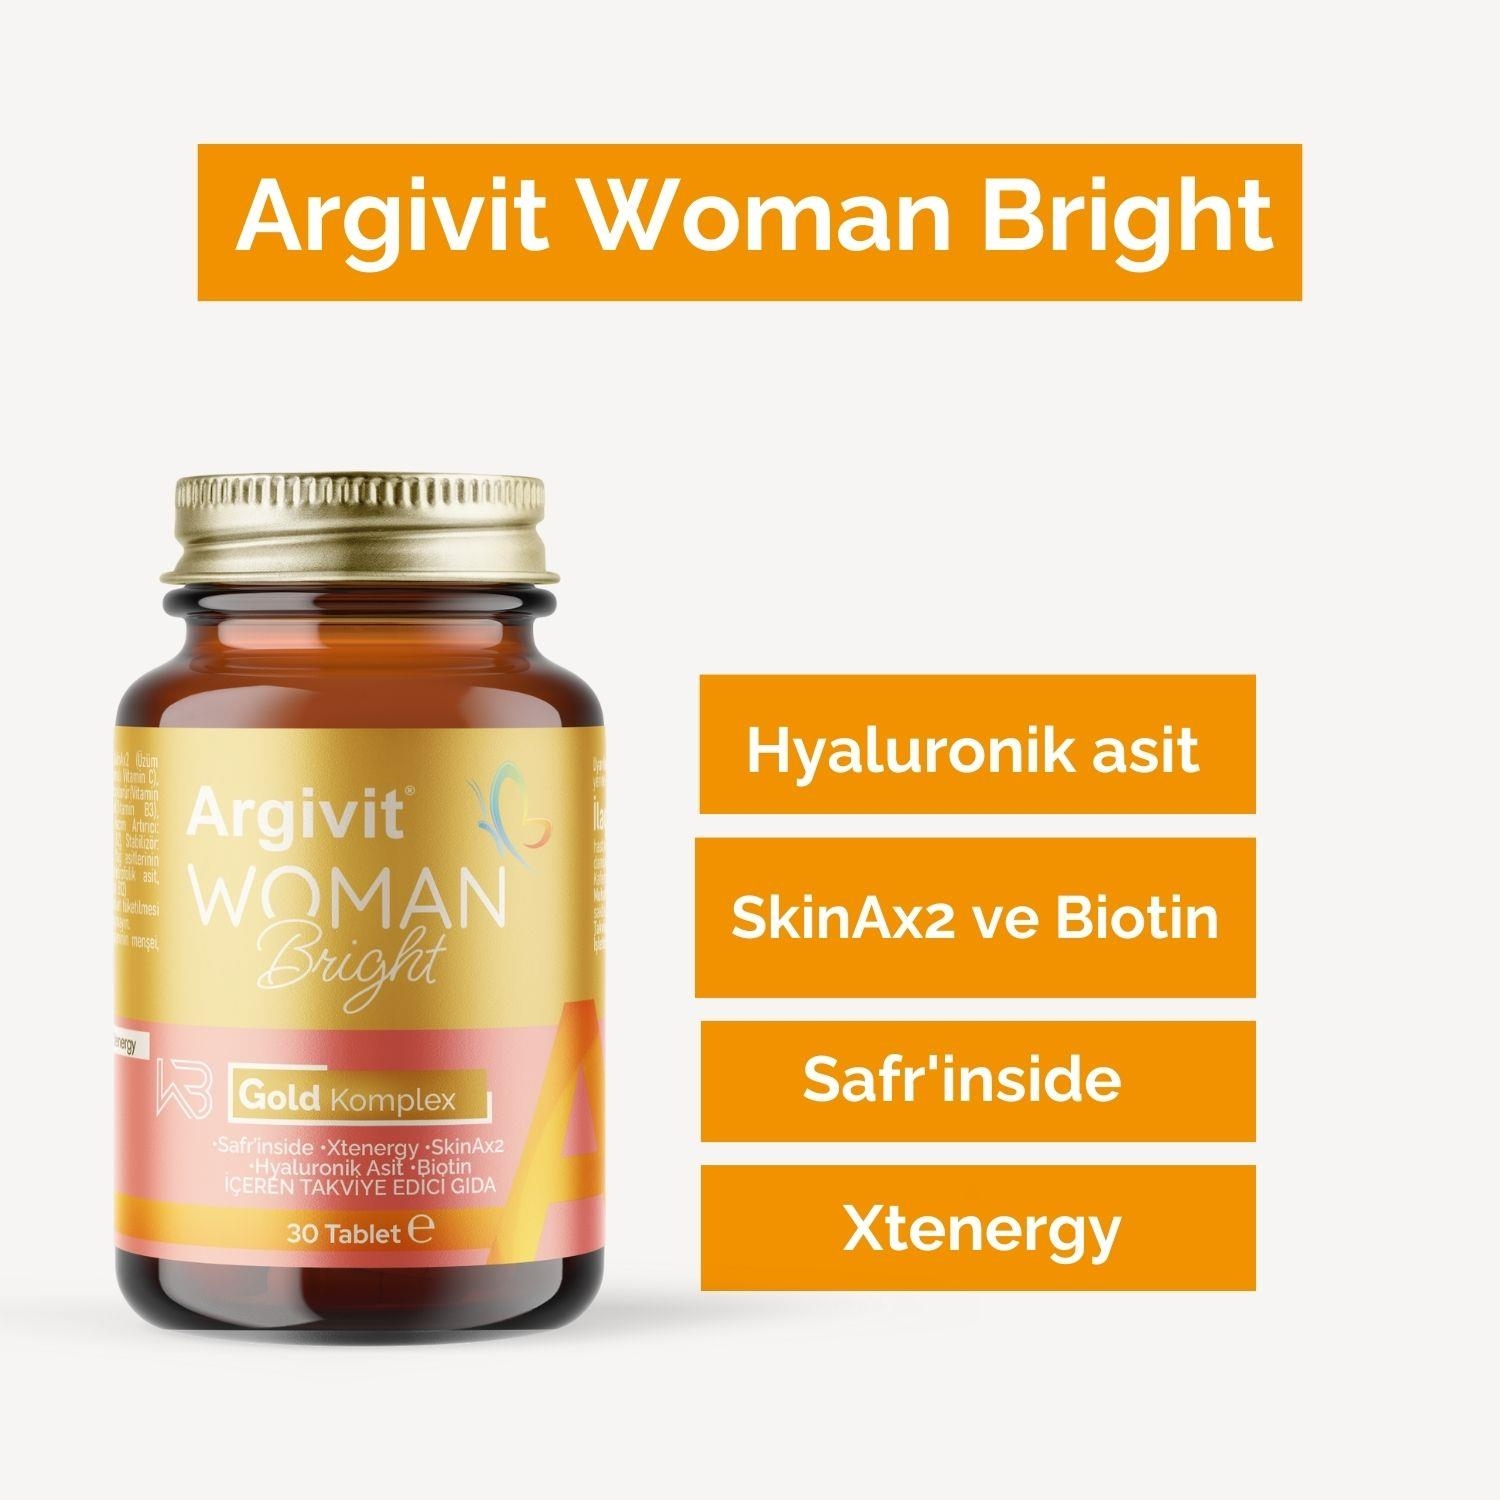 Argivit Woman Bright 30 Tablet - 2